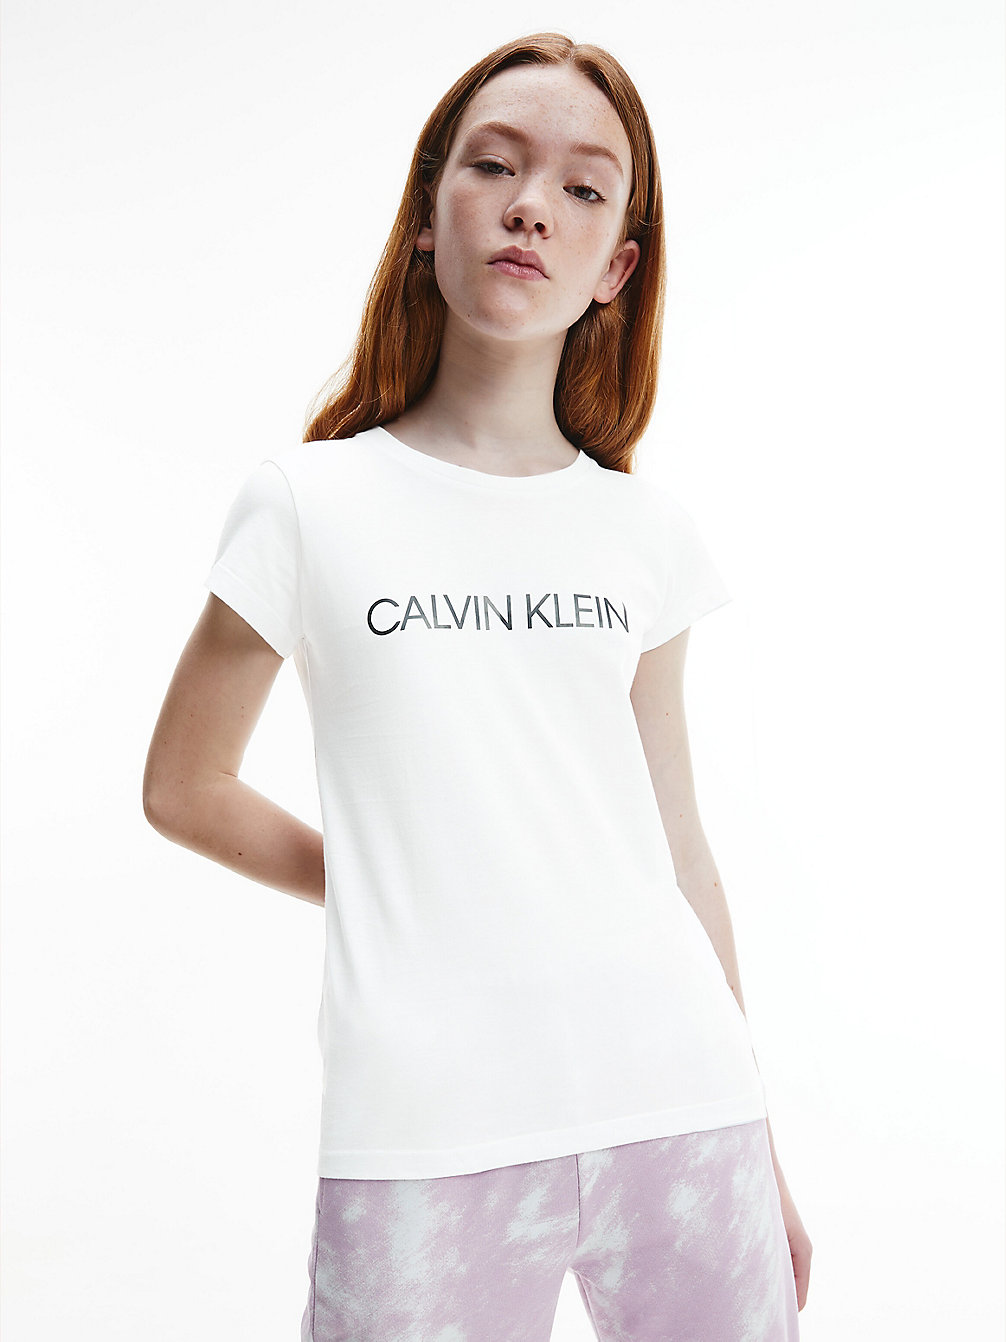 BRIGHT WHITE > Облегающая футболка из органического хлопка с логотипом > undefined girls - Calvin Klein